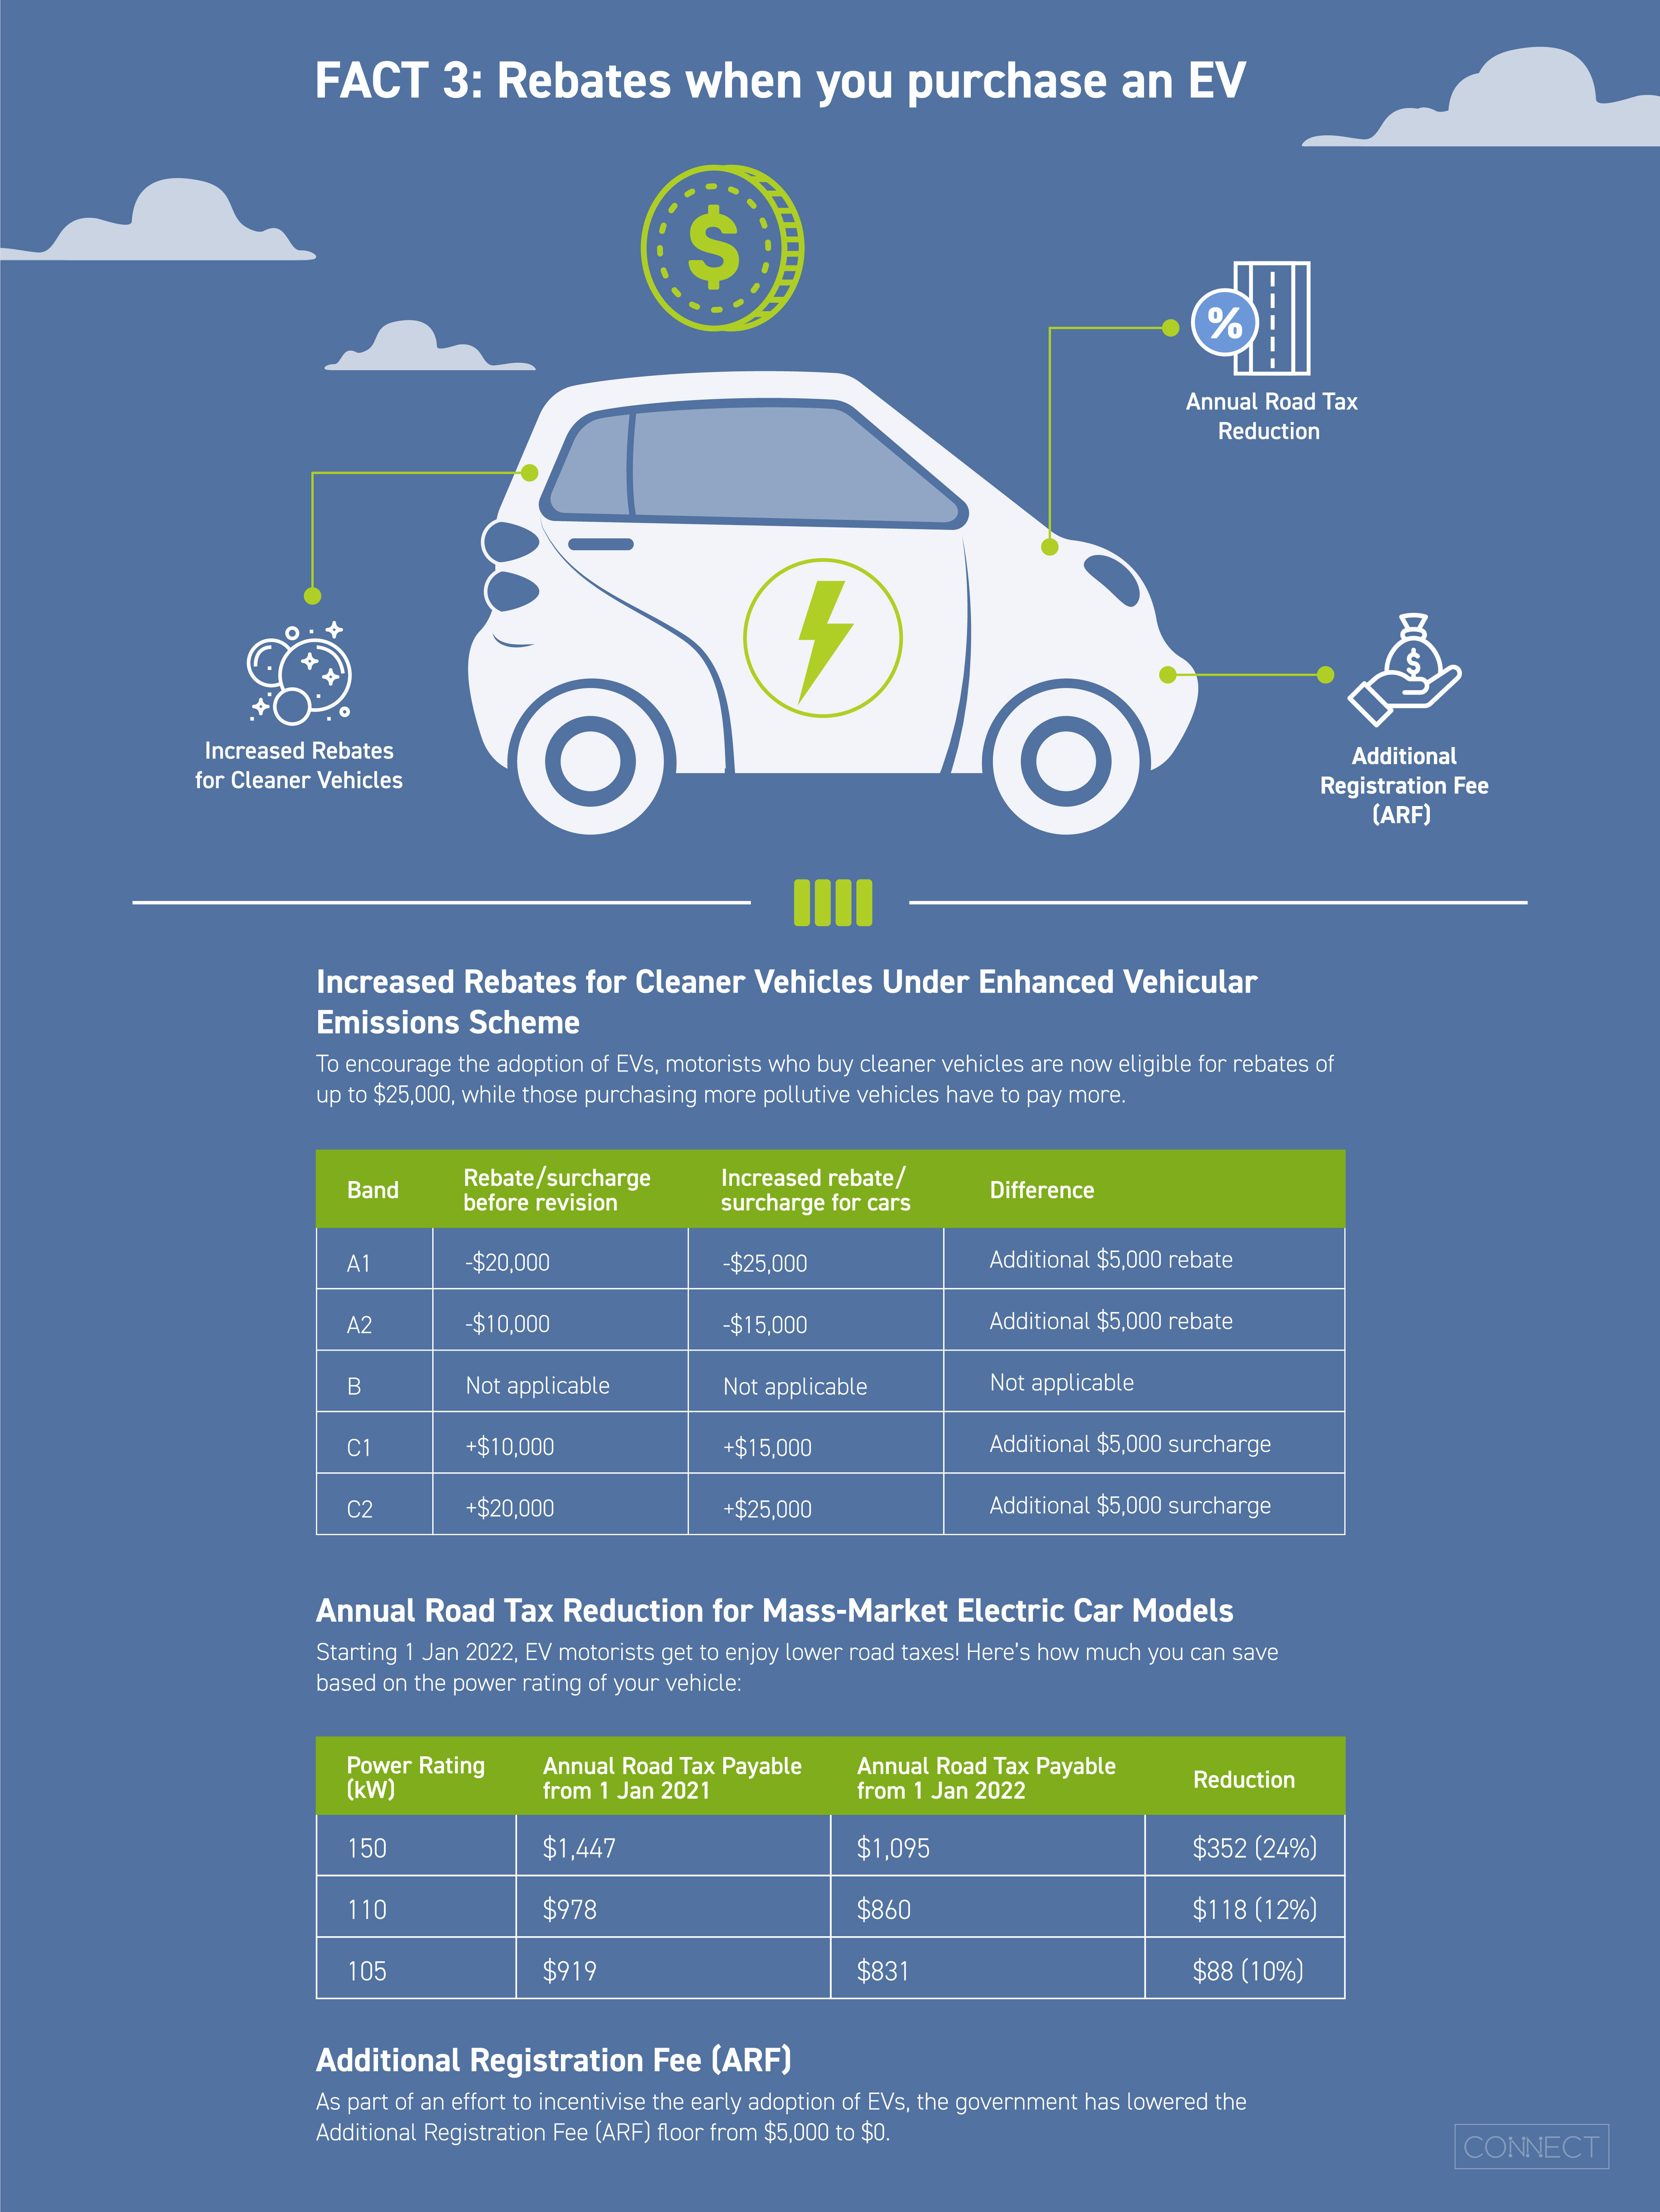 Rebates For Electric Cars In Australia